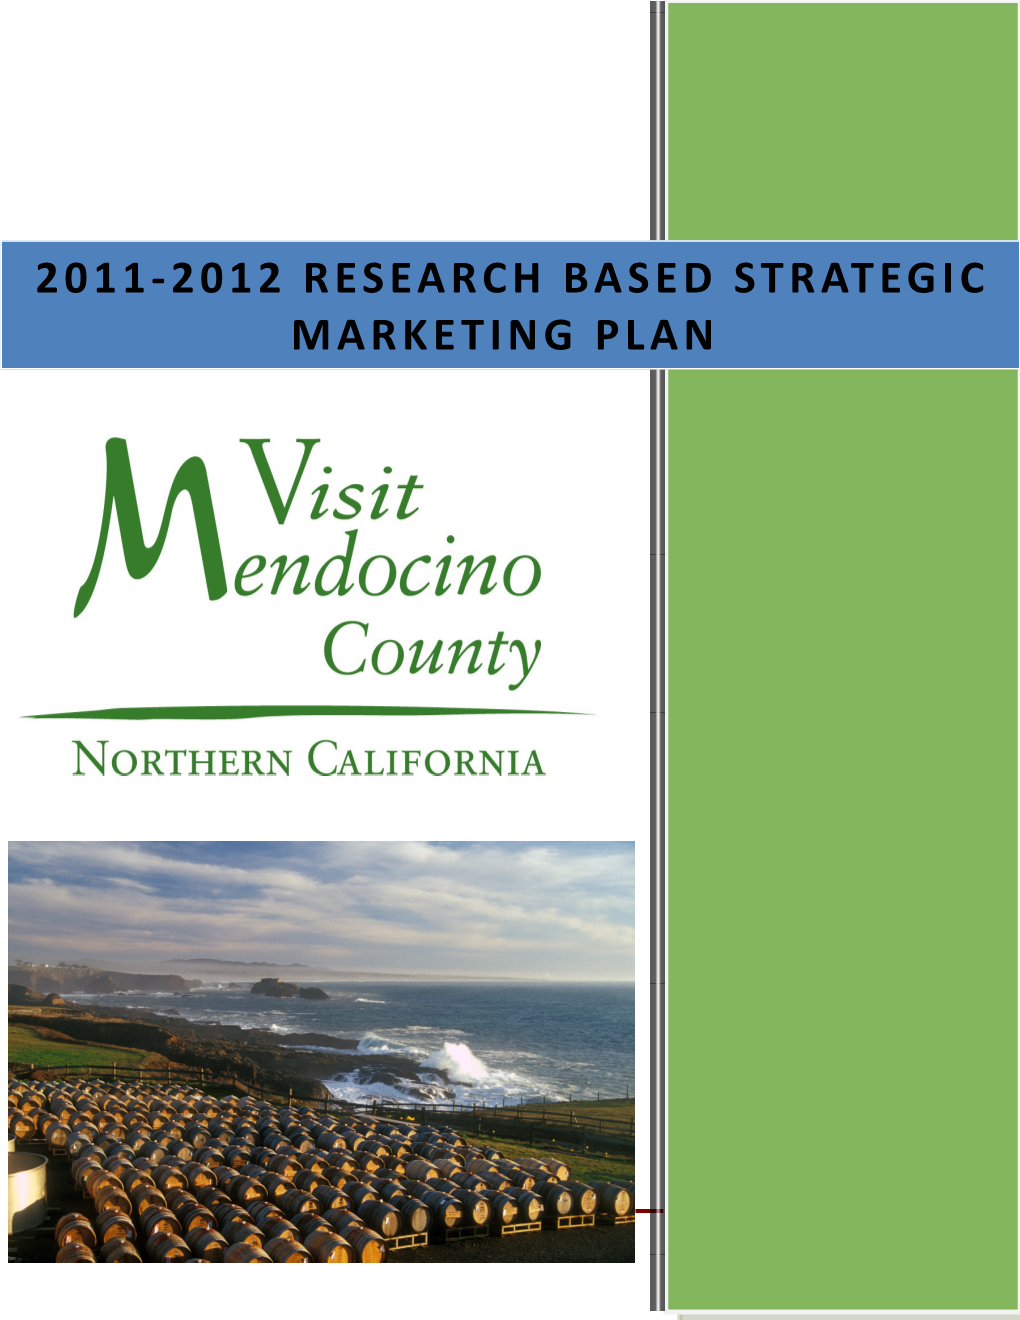 2010-2011 RESEARCH BASED STRATEGIC MARKETING Plan